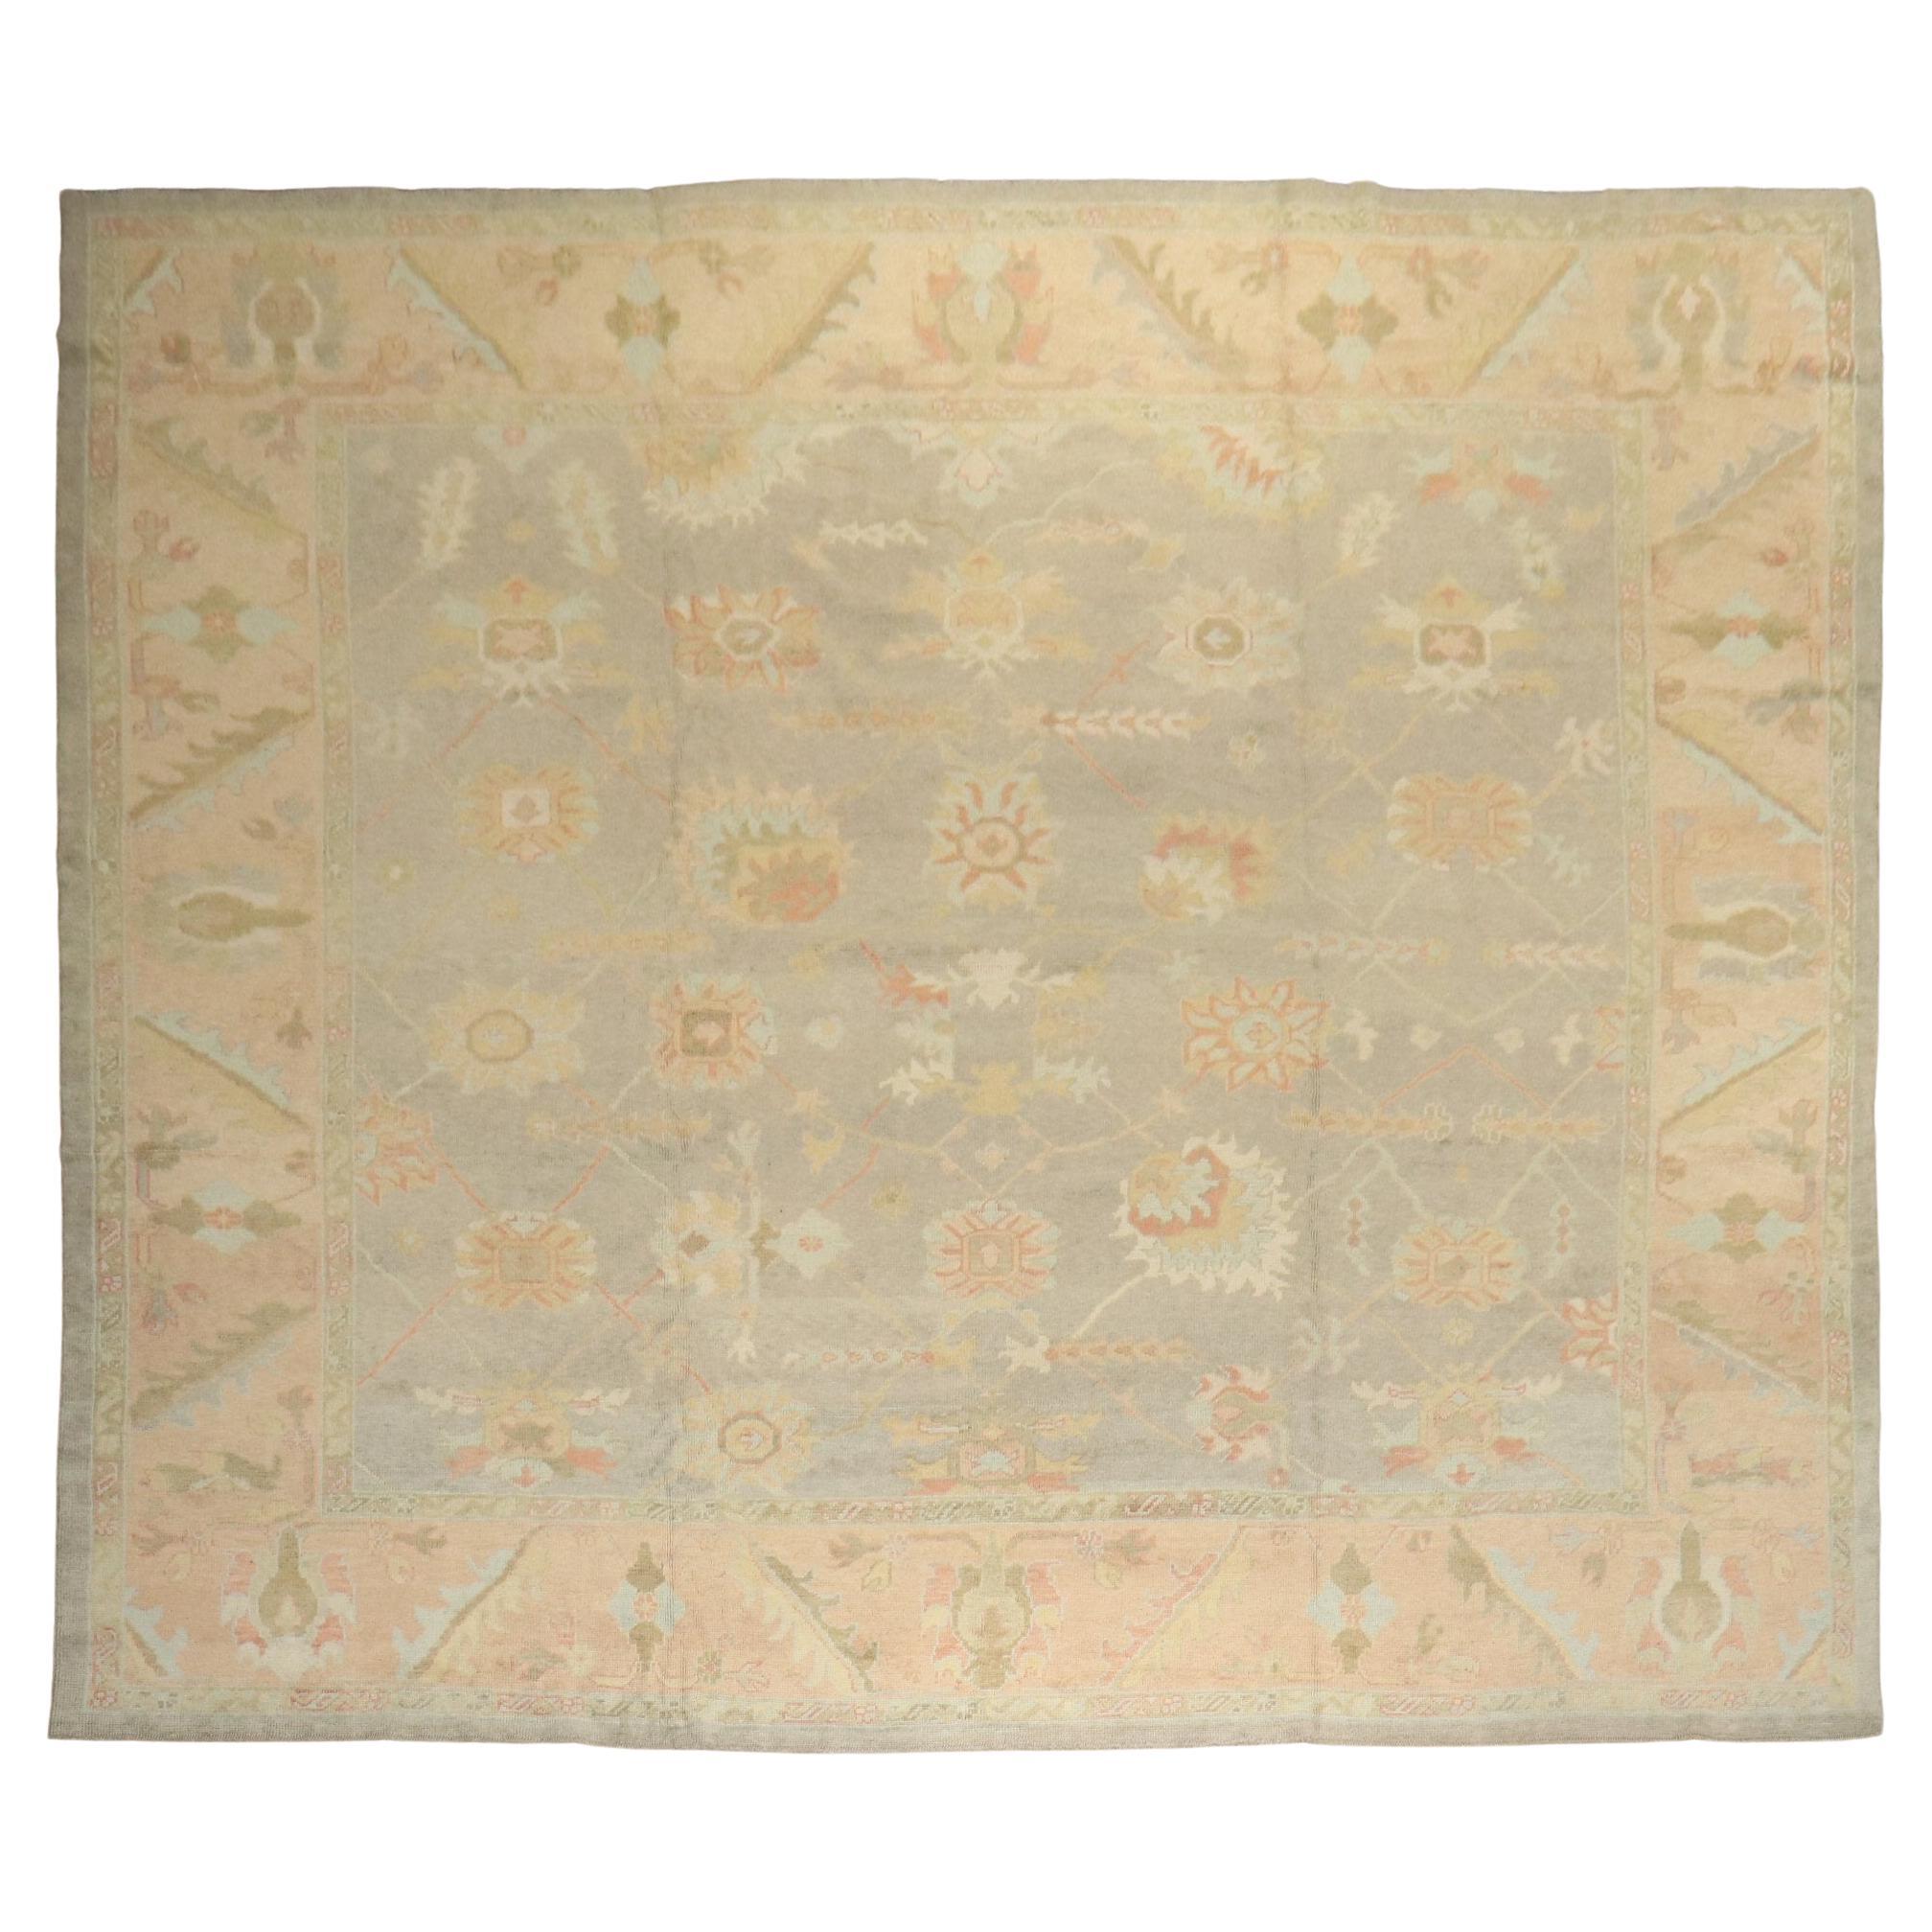 Zabihi Collection Vintage Inspired Large Gray Turkish Square Oushak Carpet